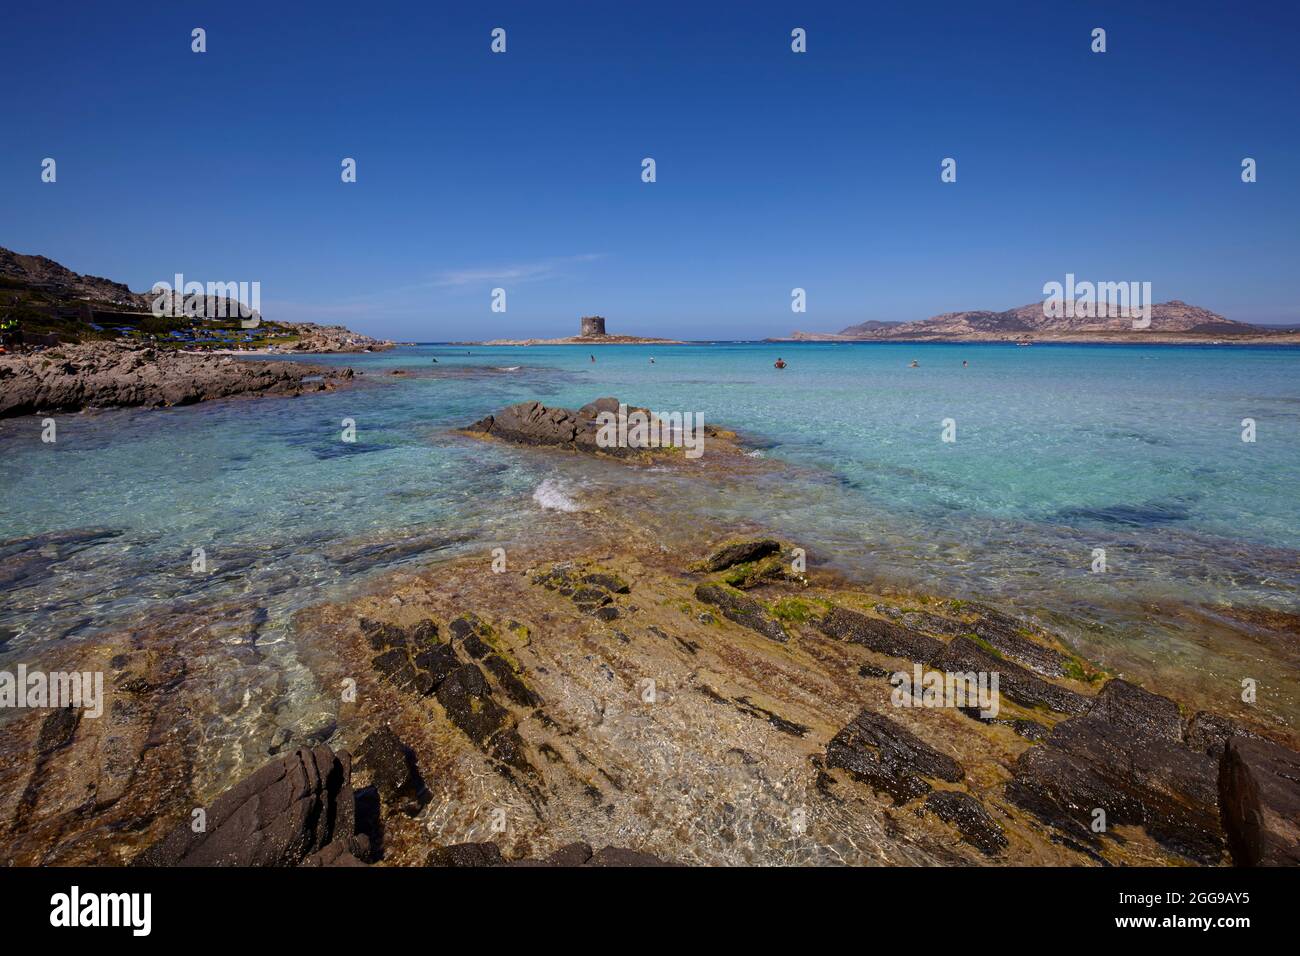 The sea in Stintino with La Pelosa tower, Sardinia, Italy Stock Photo